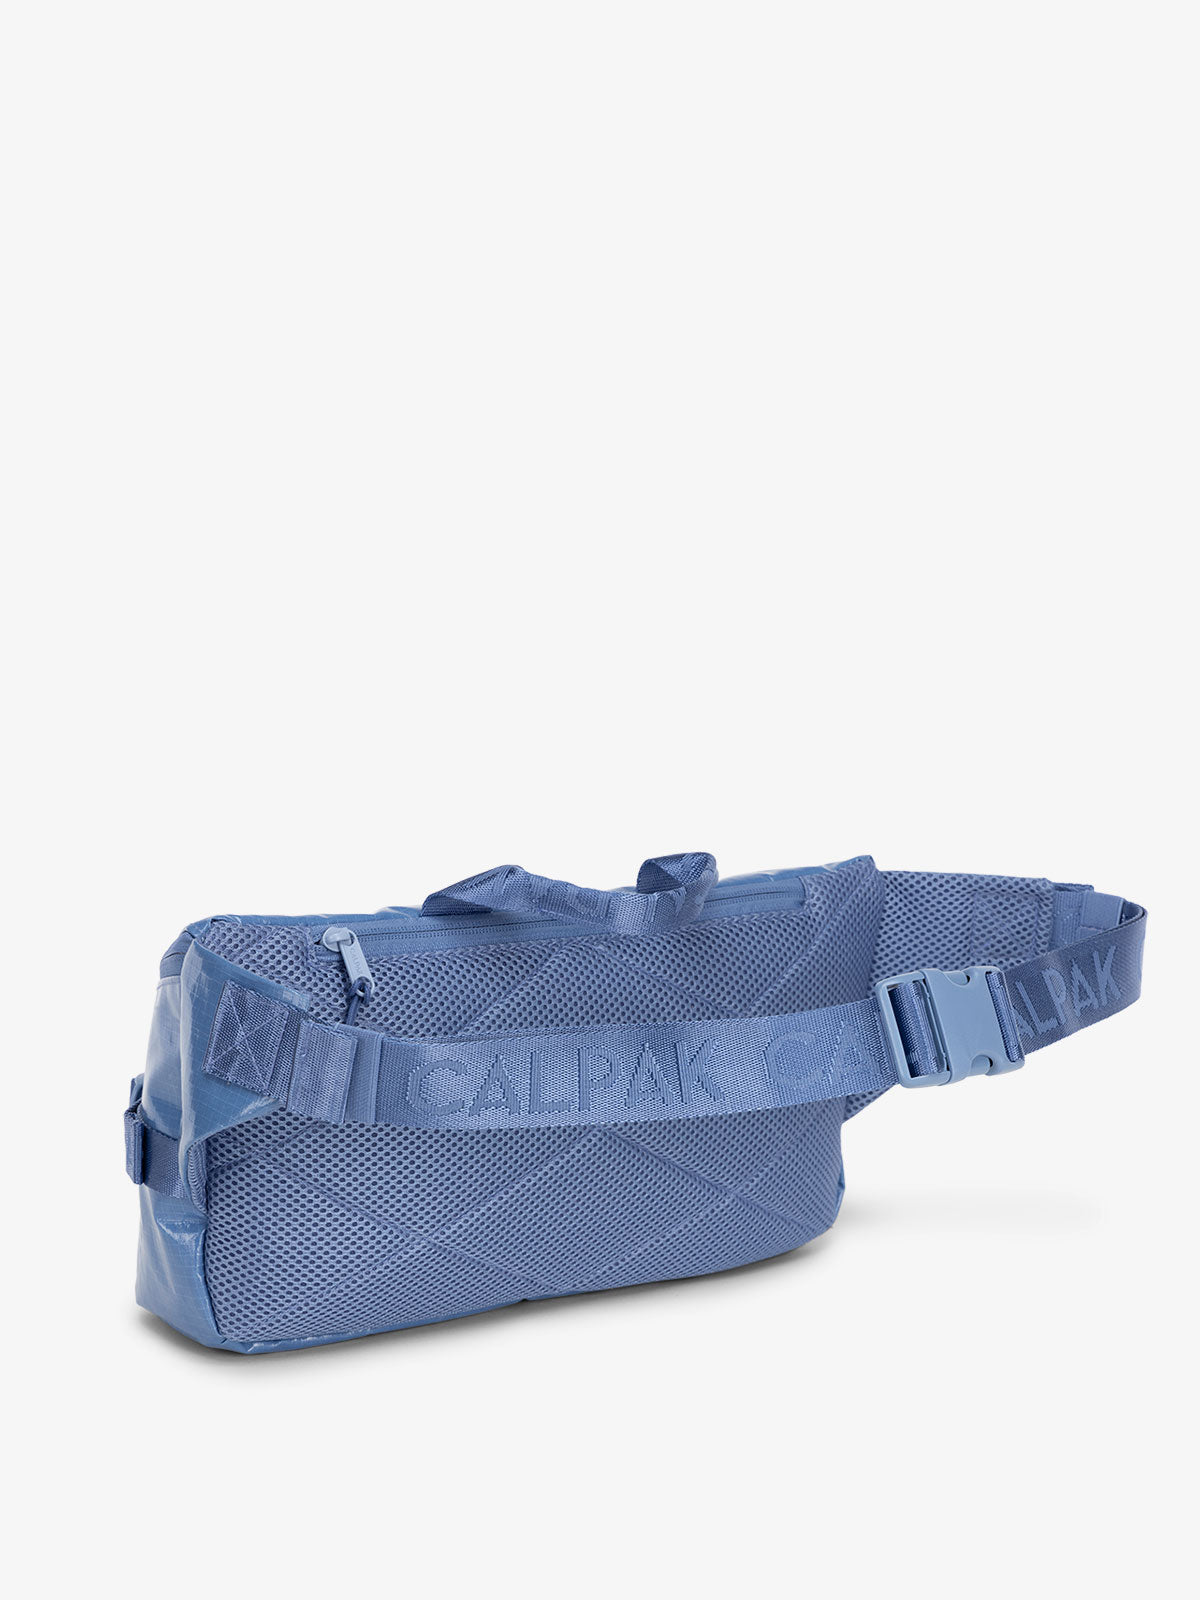 This Sling Bag Is Just $39 at Calpak